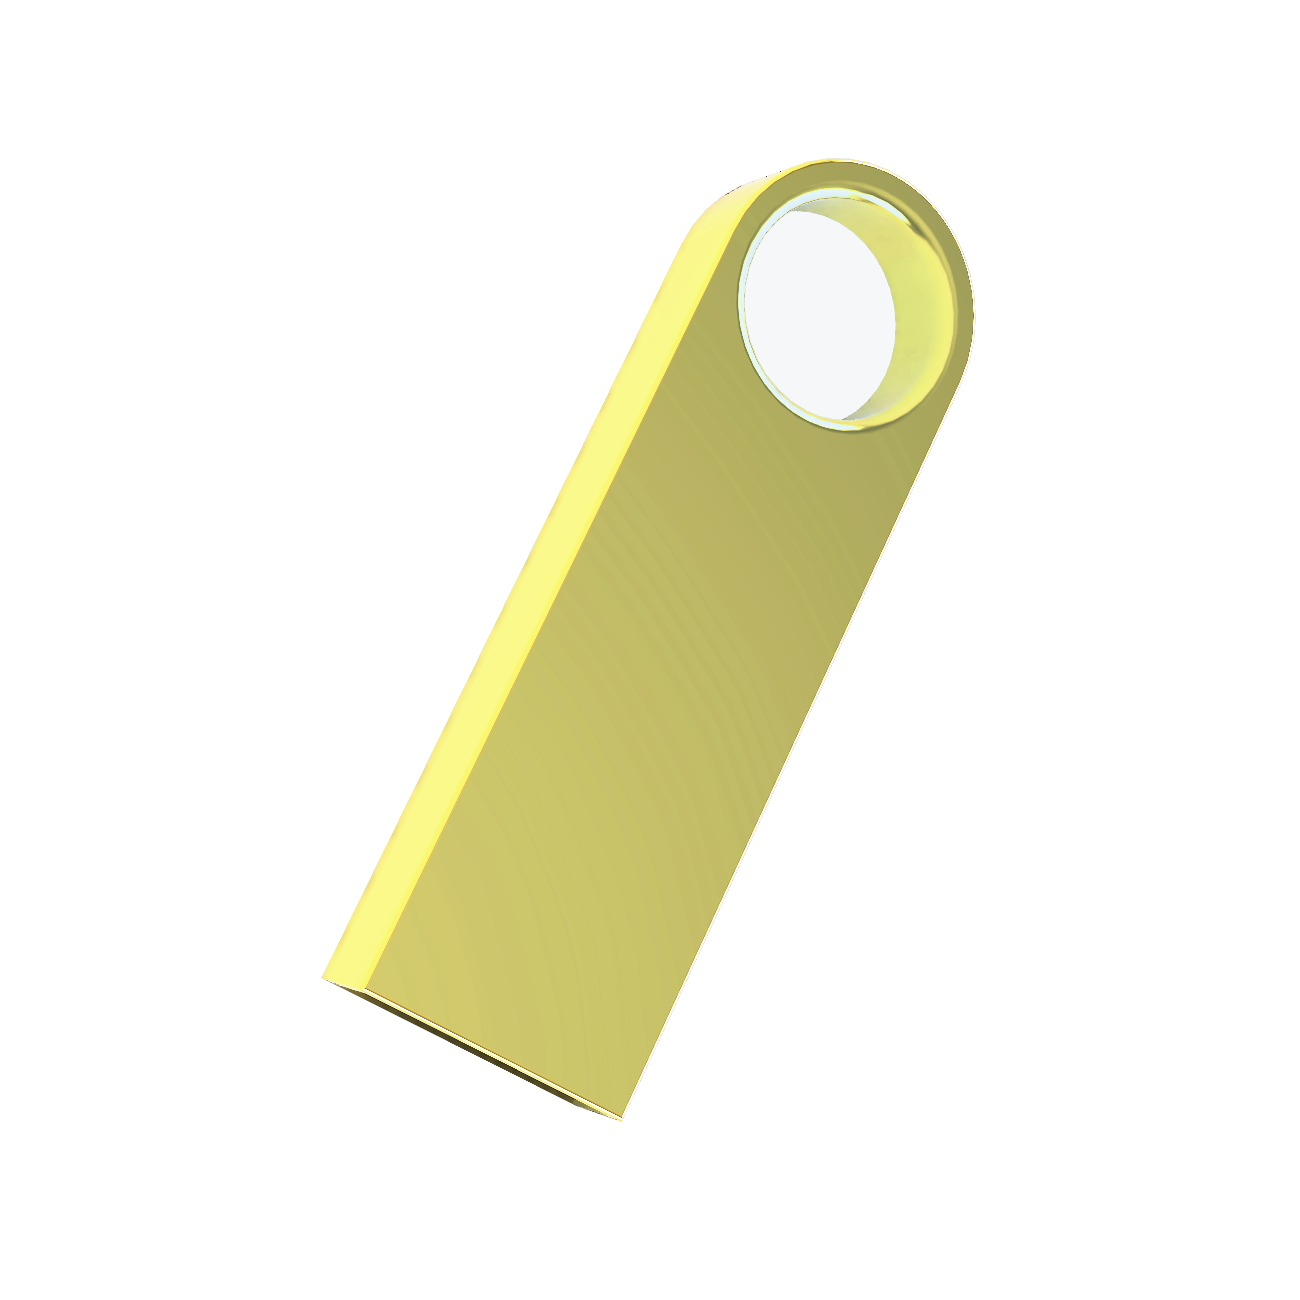 USB USB-Stick 16 GERMANY GB) ® SE09 (Gold,